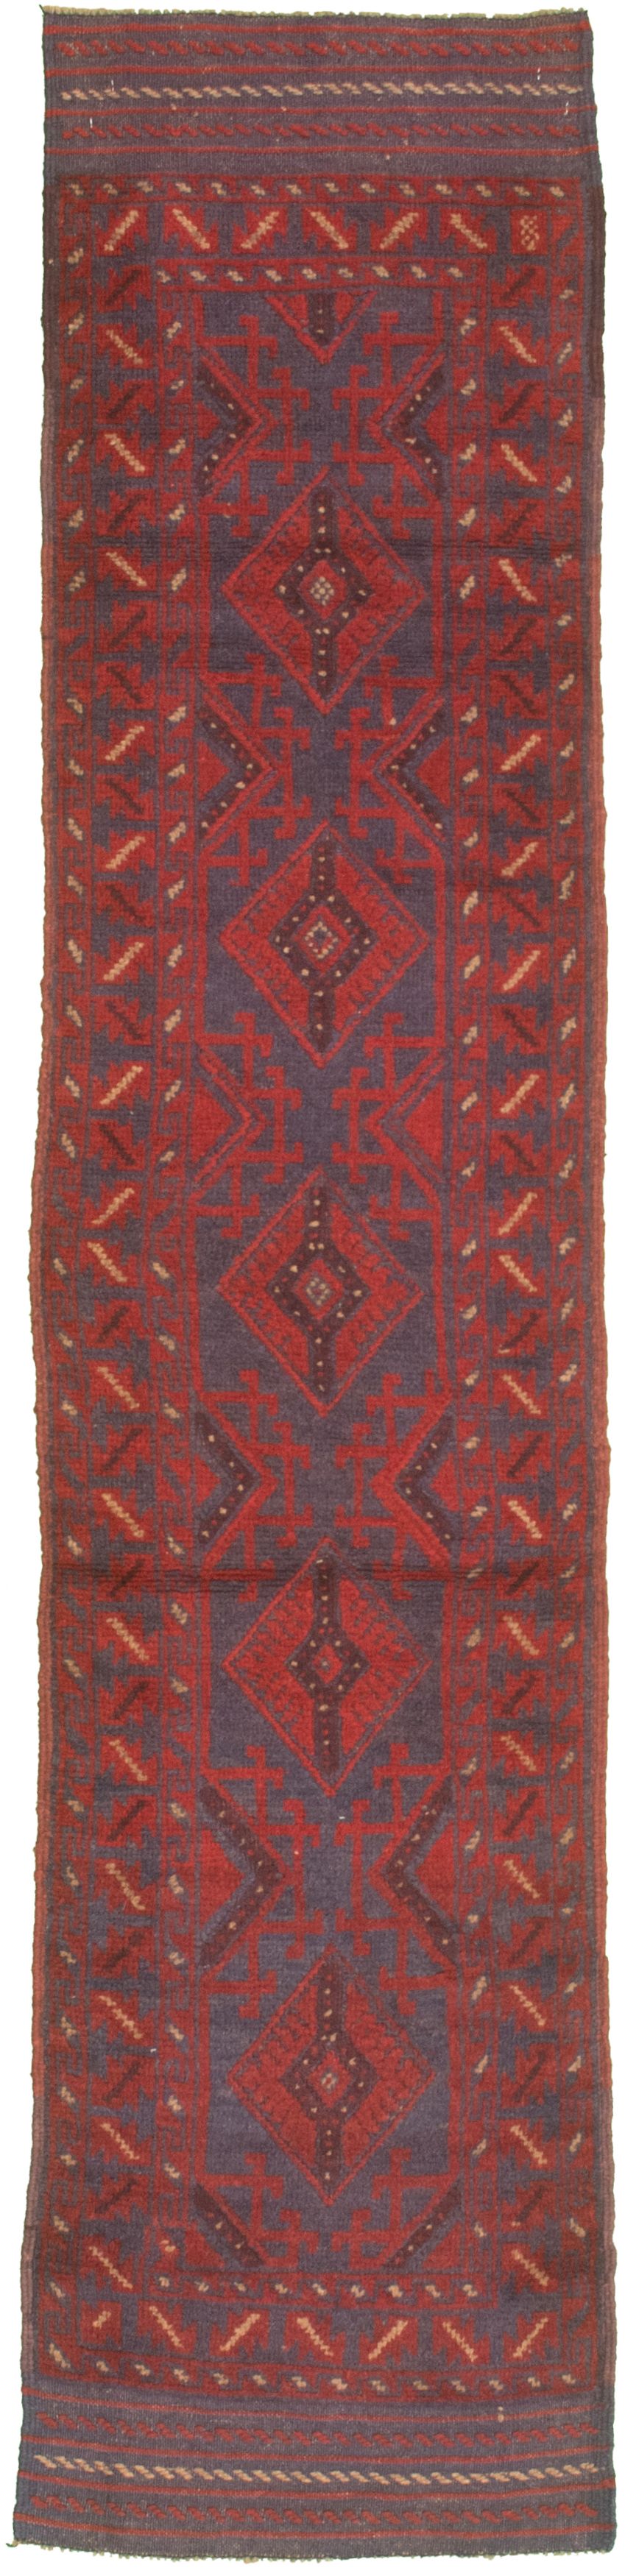 Hand-knotted Tajik Caucasian Red Wool Rug 1'10" x 8'8"  Size: 1'10" x 8'8"  